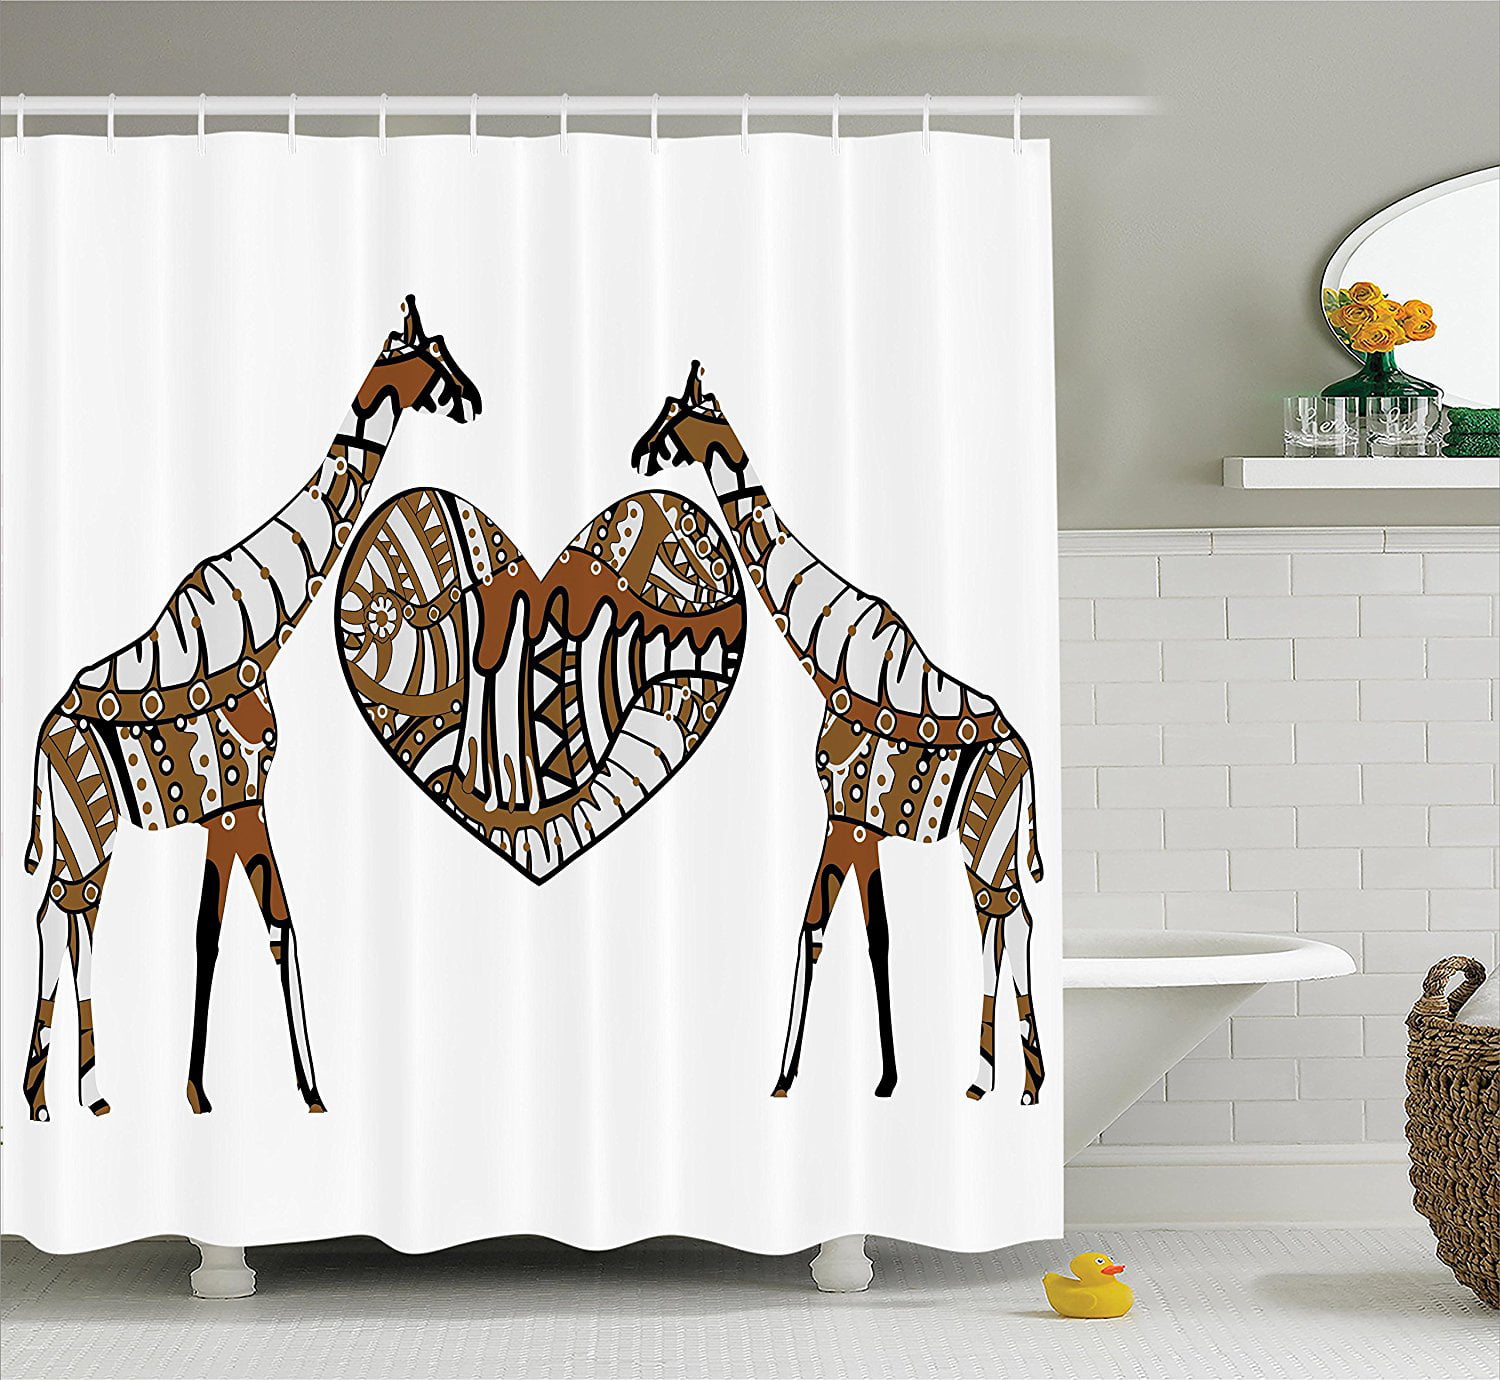 Details about   Garden Giraffe Scenery 3D Kids Room Blockout Drapes Fabric Window Curtains Mural 